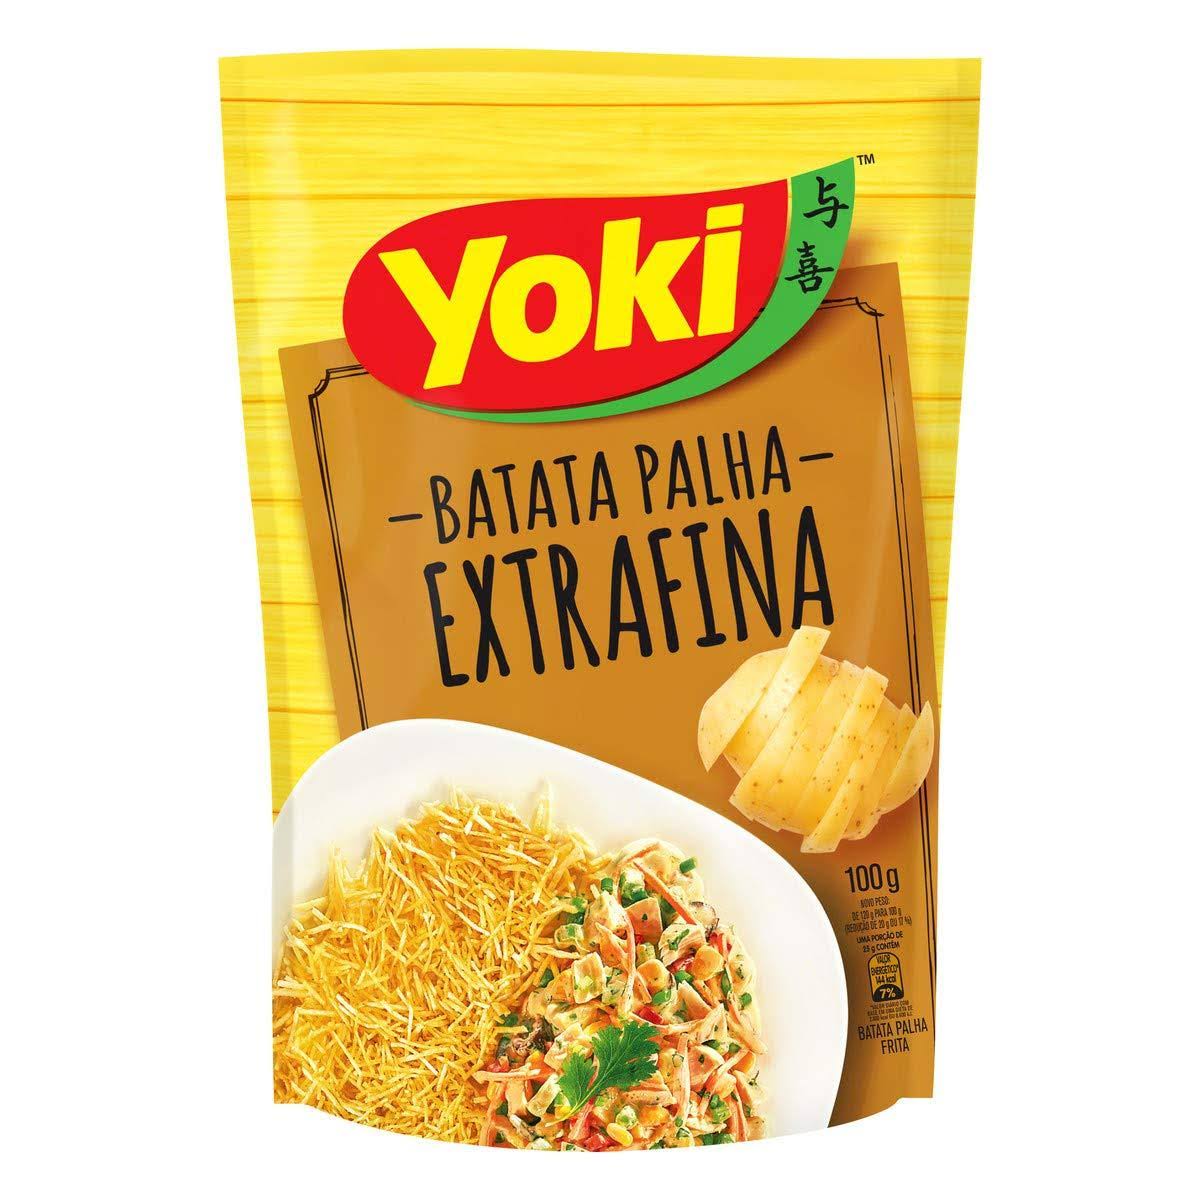 Batata Palha - Yoki Extrafina - 100g